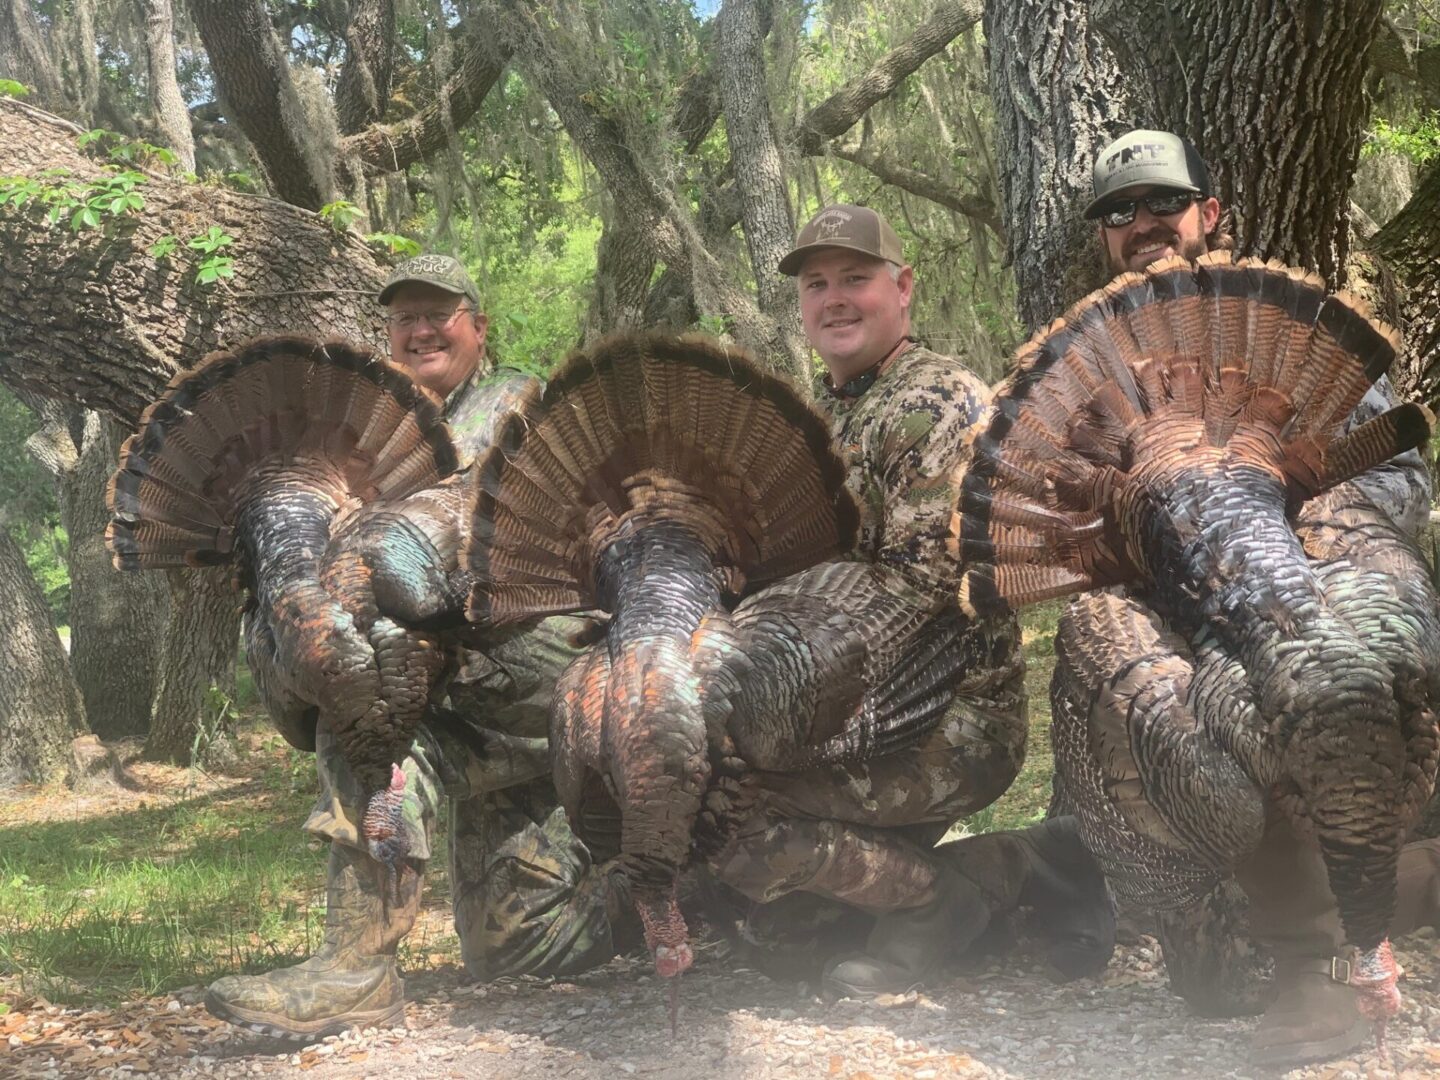 three men posing with turkeys they caught